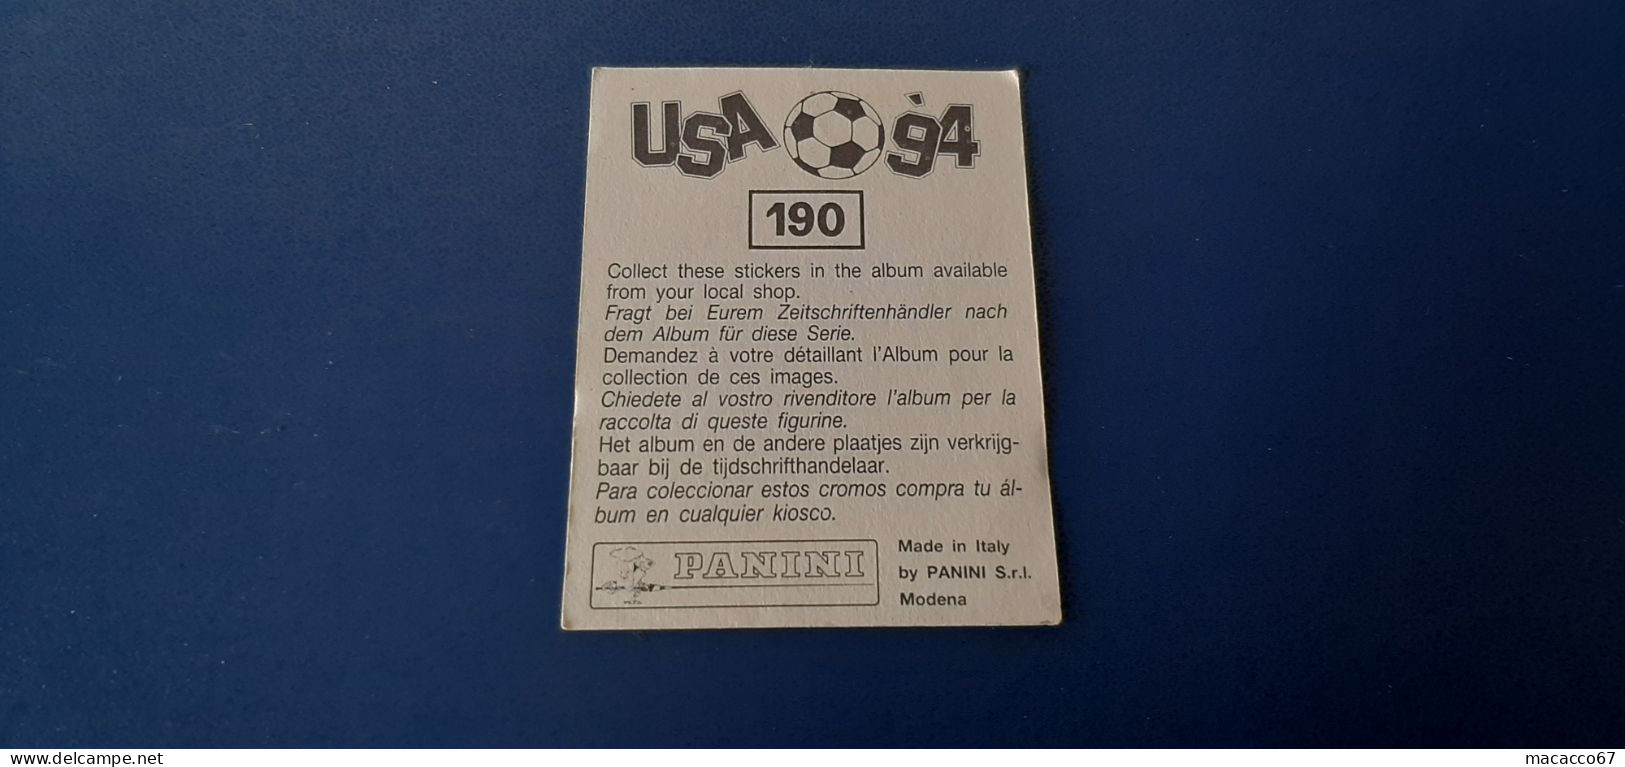 Figurina Panini WM USA 94 - 190 Alcorta Spagna - Edición Italiana